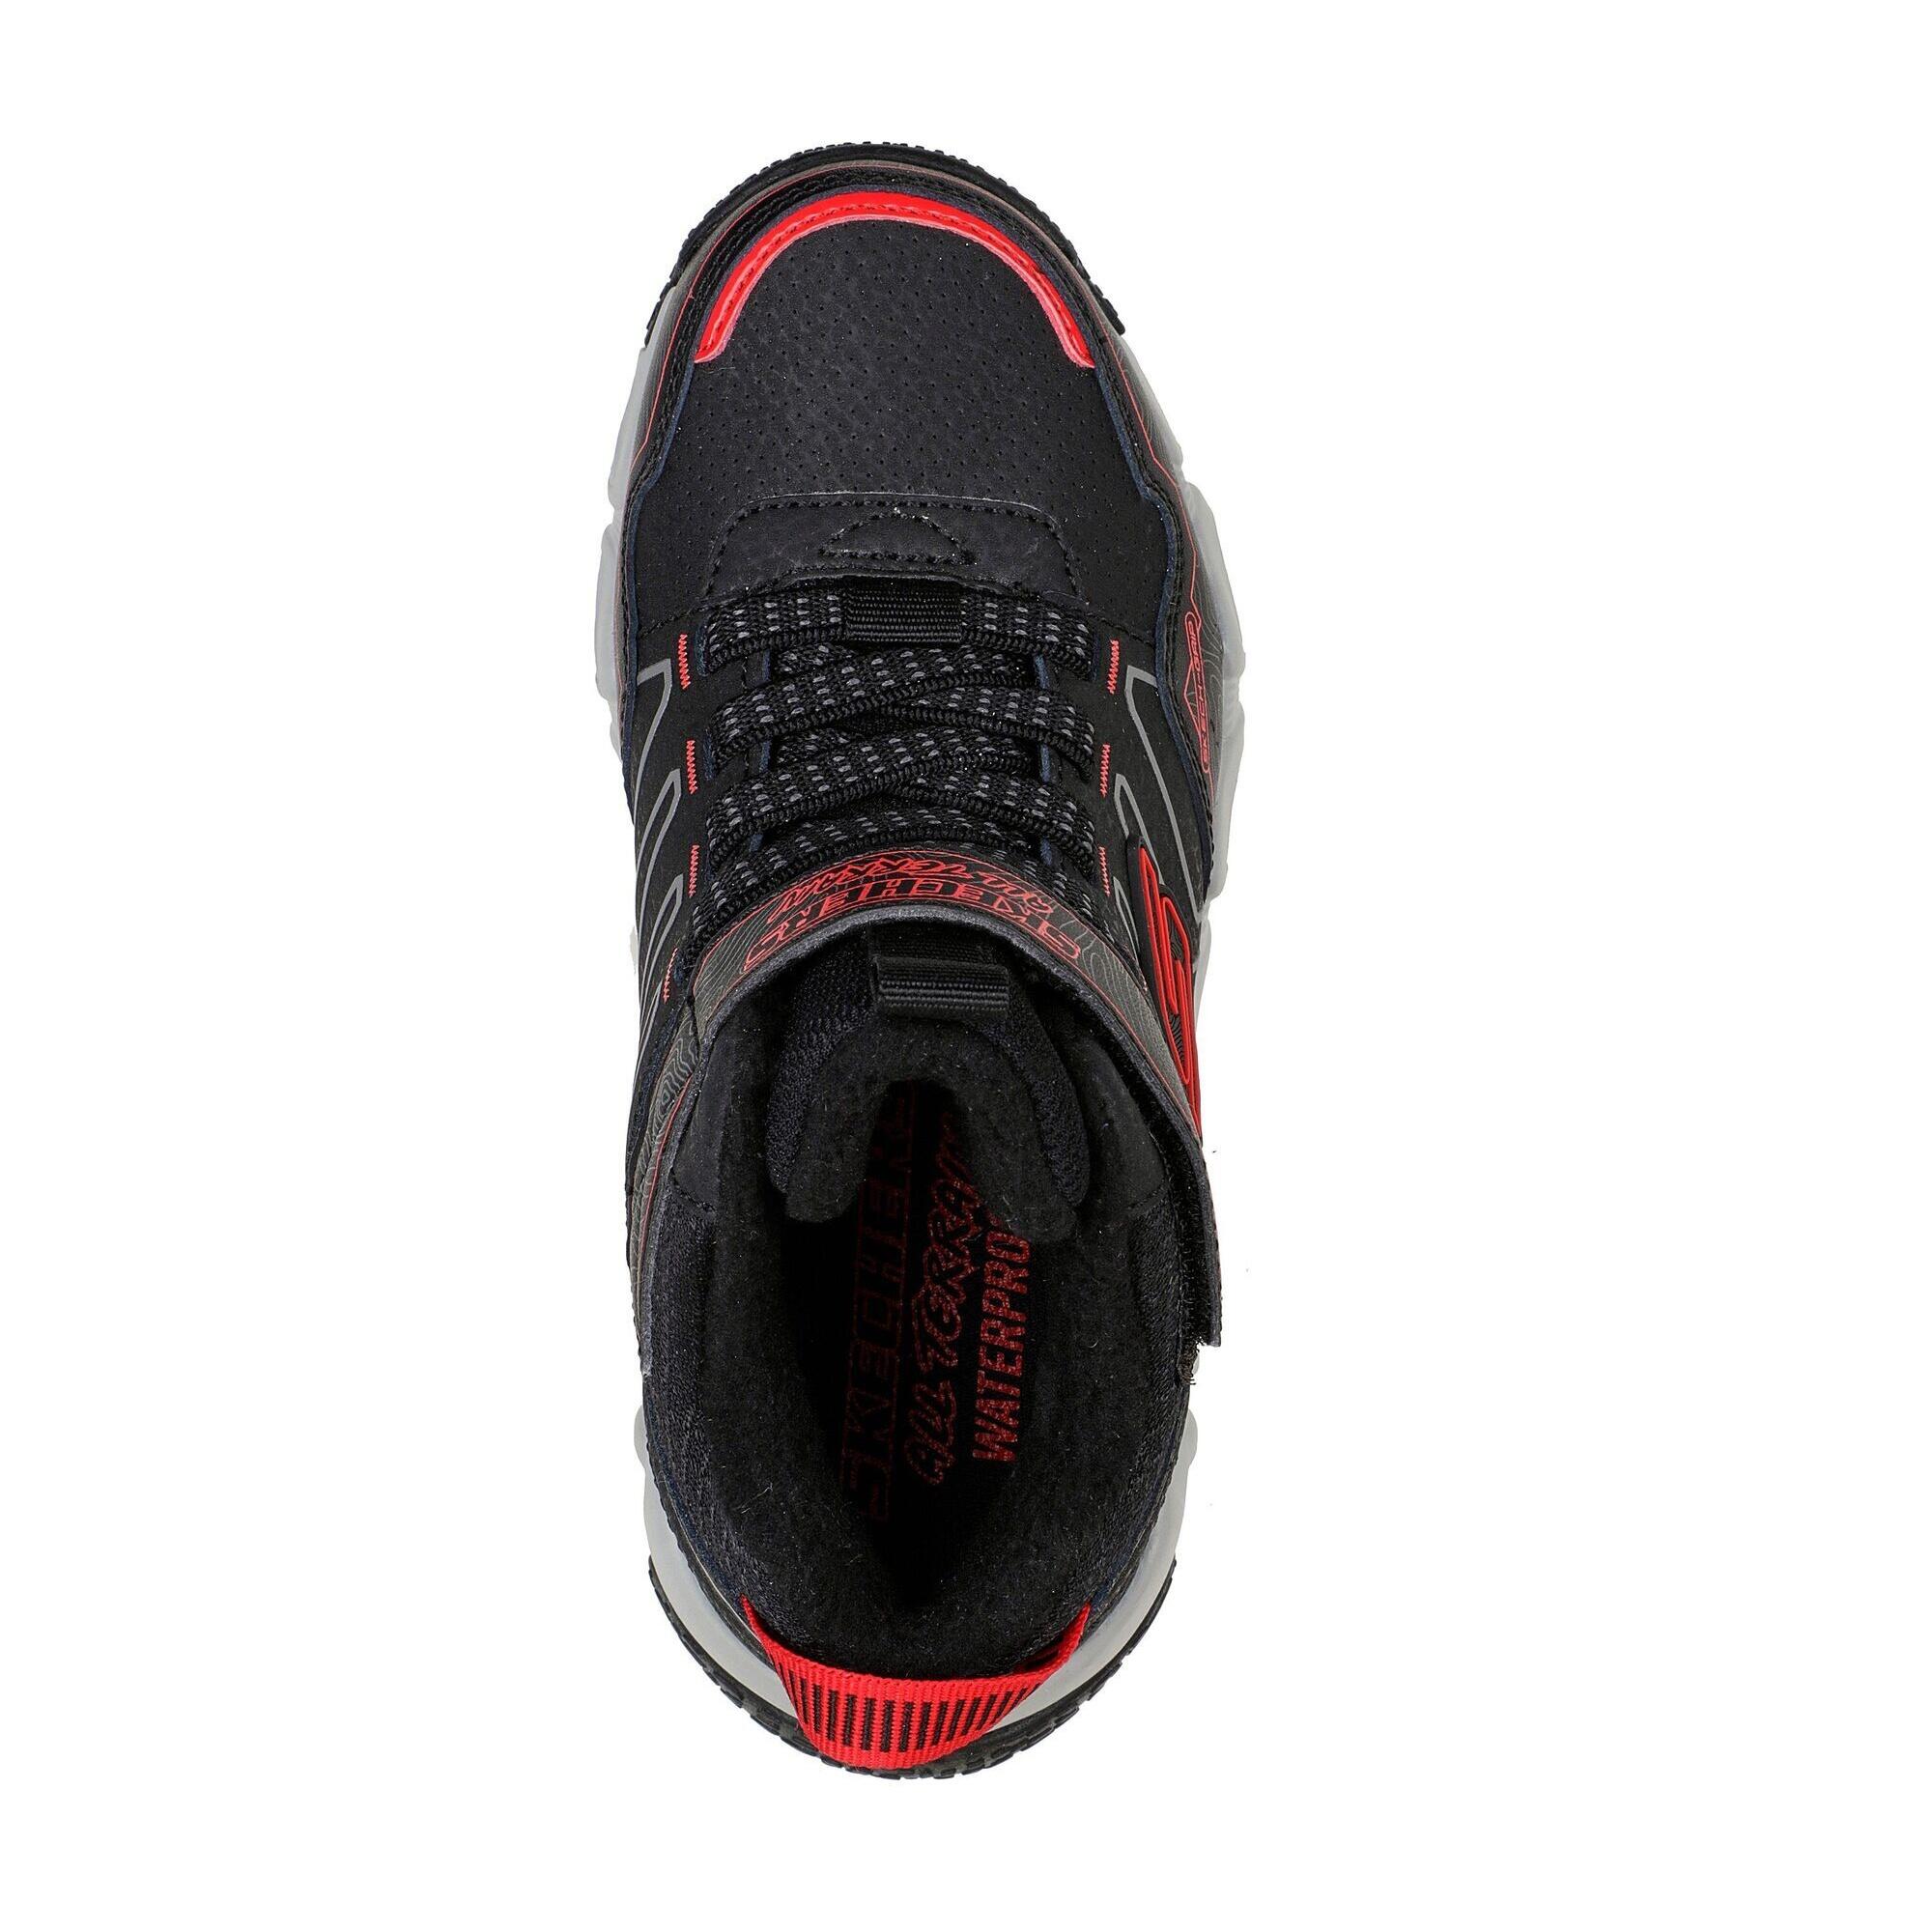 Childrens/Kids Velocitrek Leather Walking Boots (Black/Red) 4/5